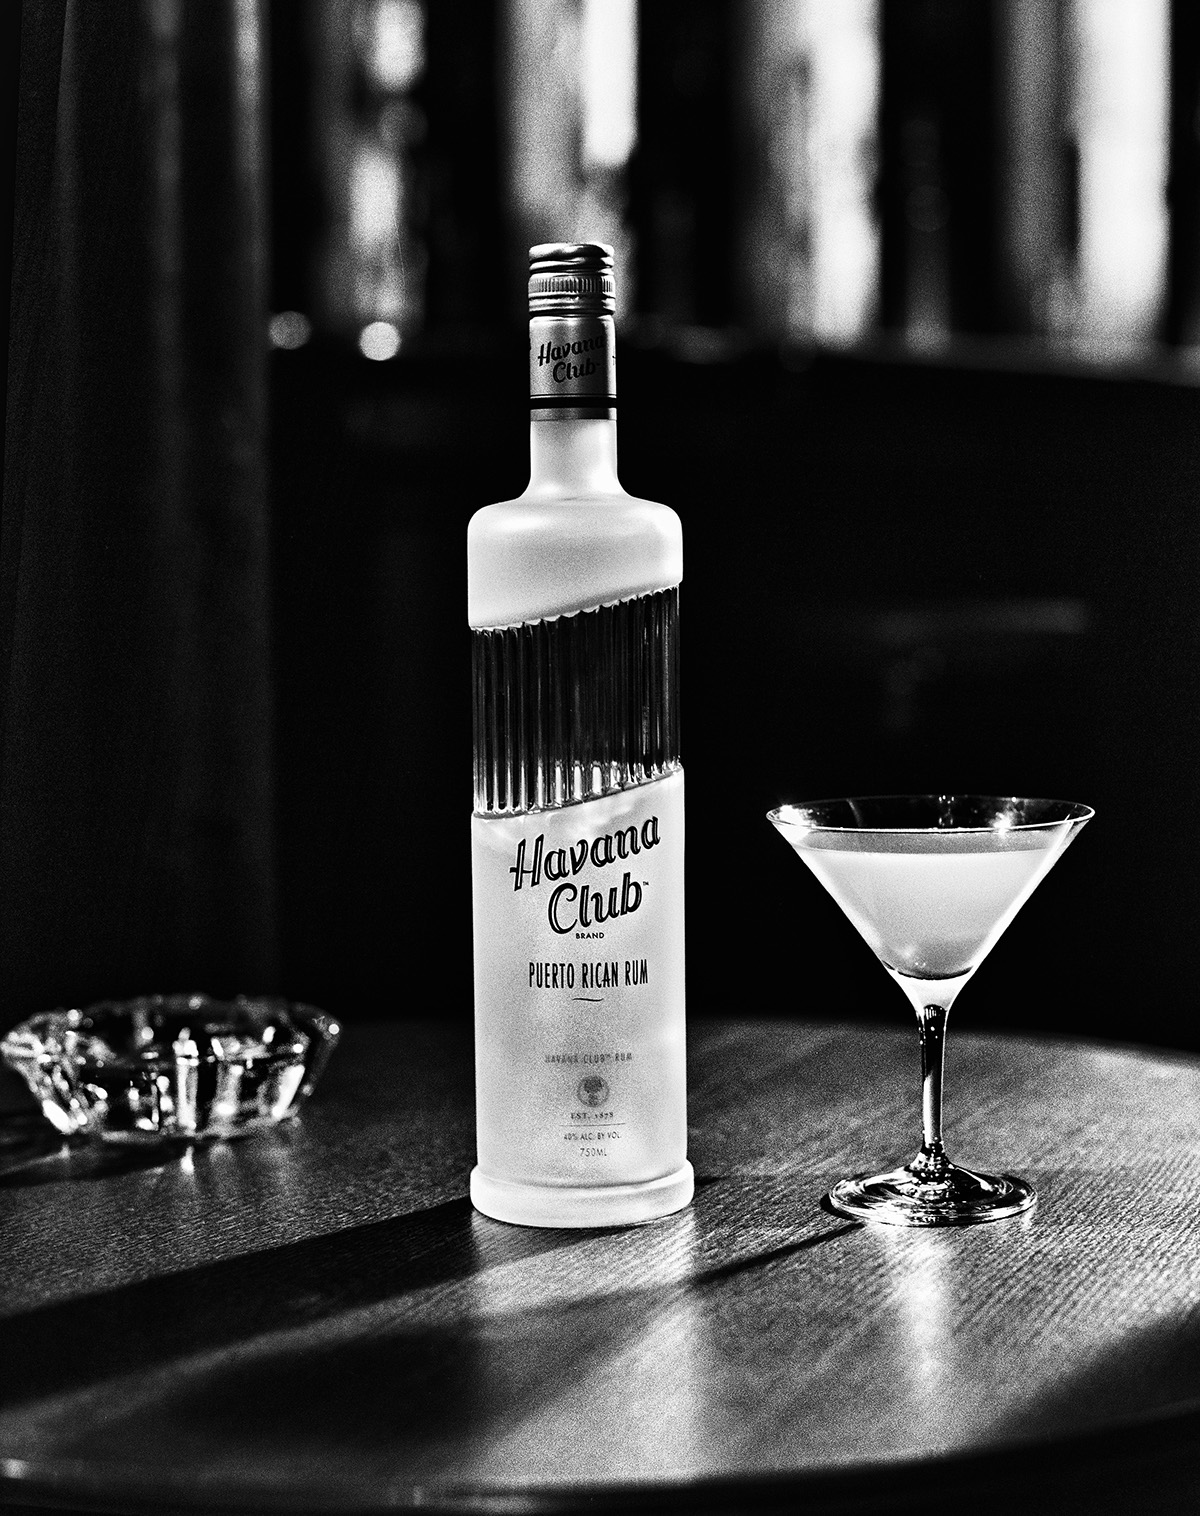 Steven Lyon Havana Club black and white retro image